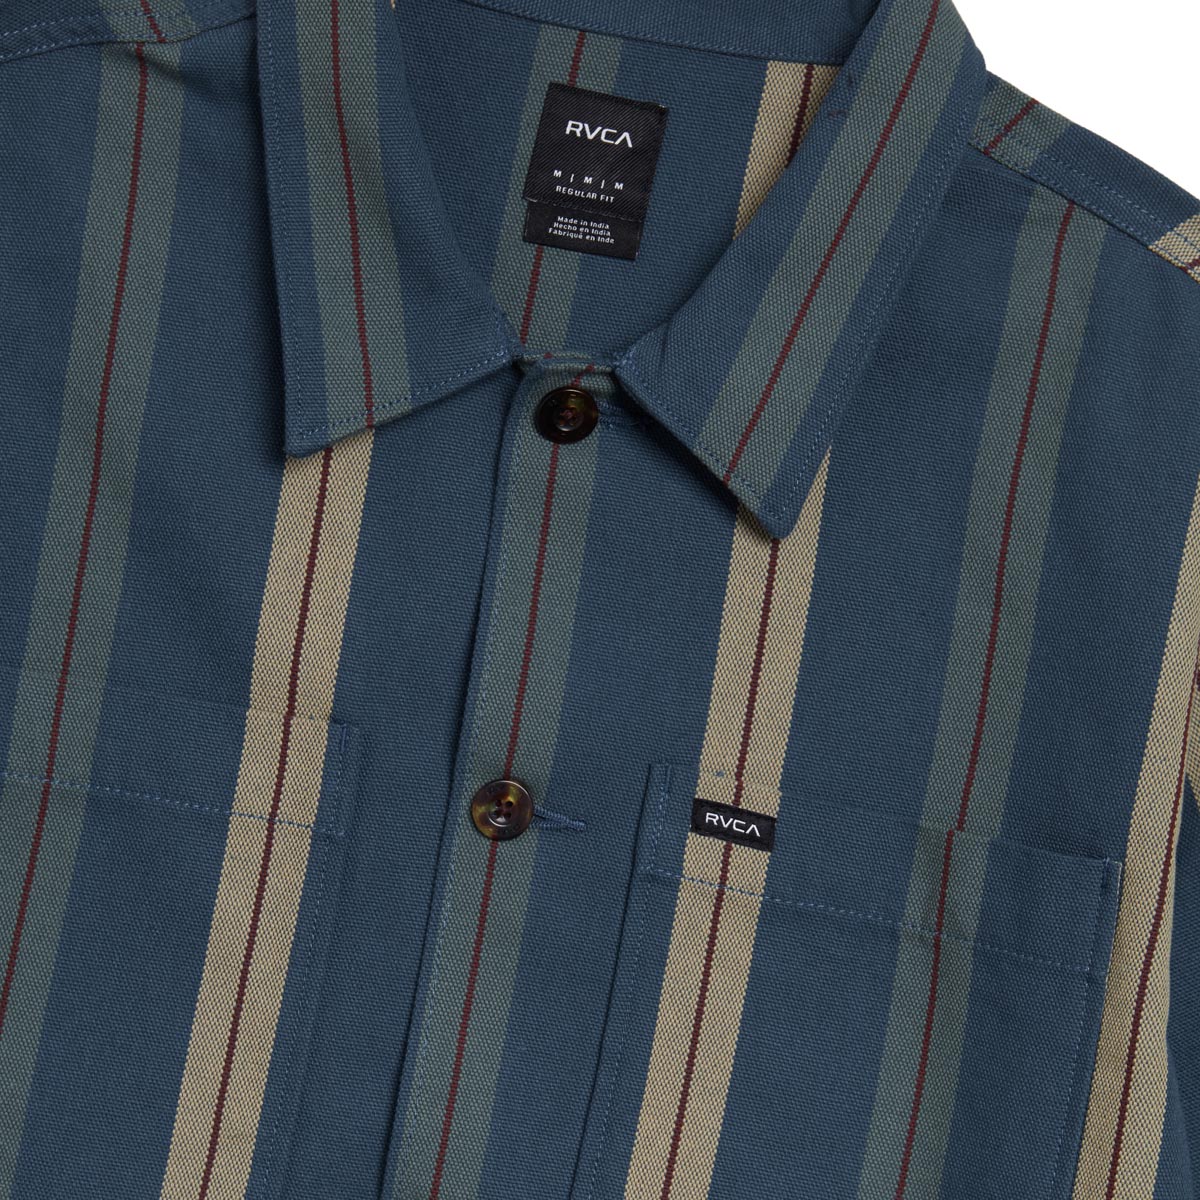 RVCA Americana Overshirt Long Sleeve Shirt - Duck Blue image 3